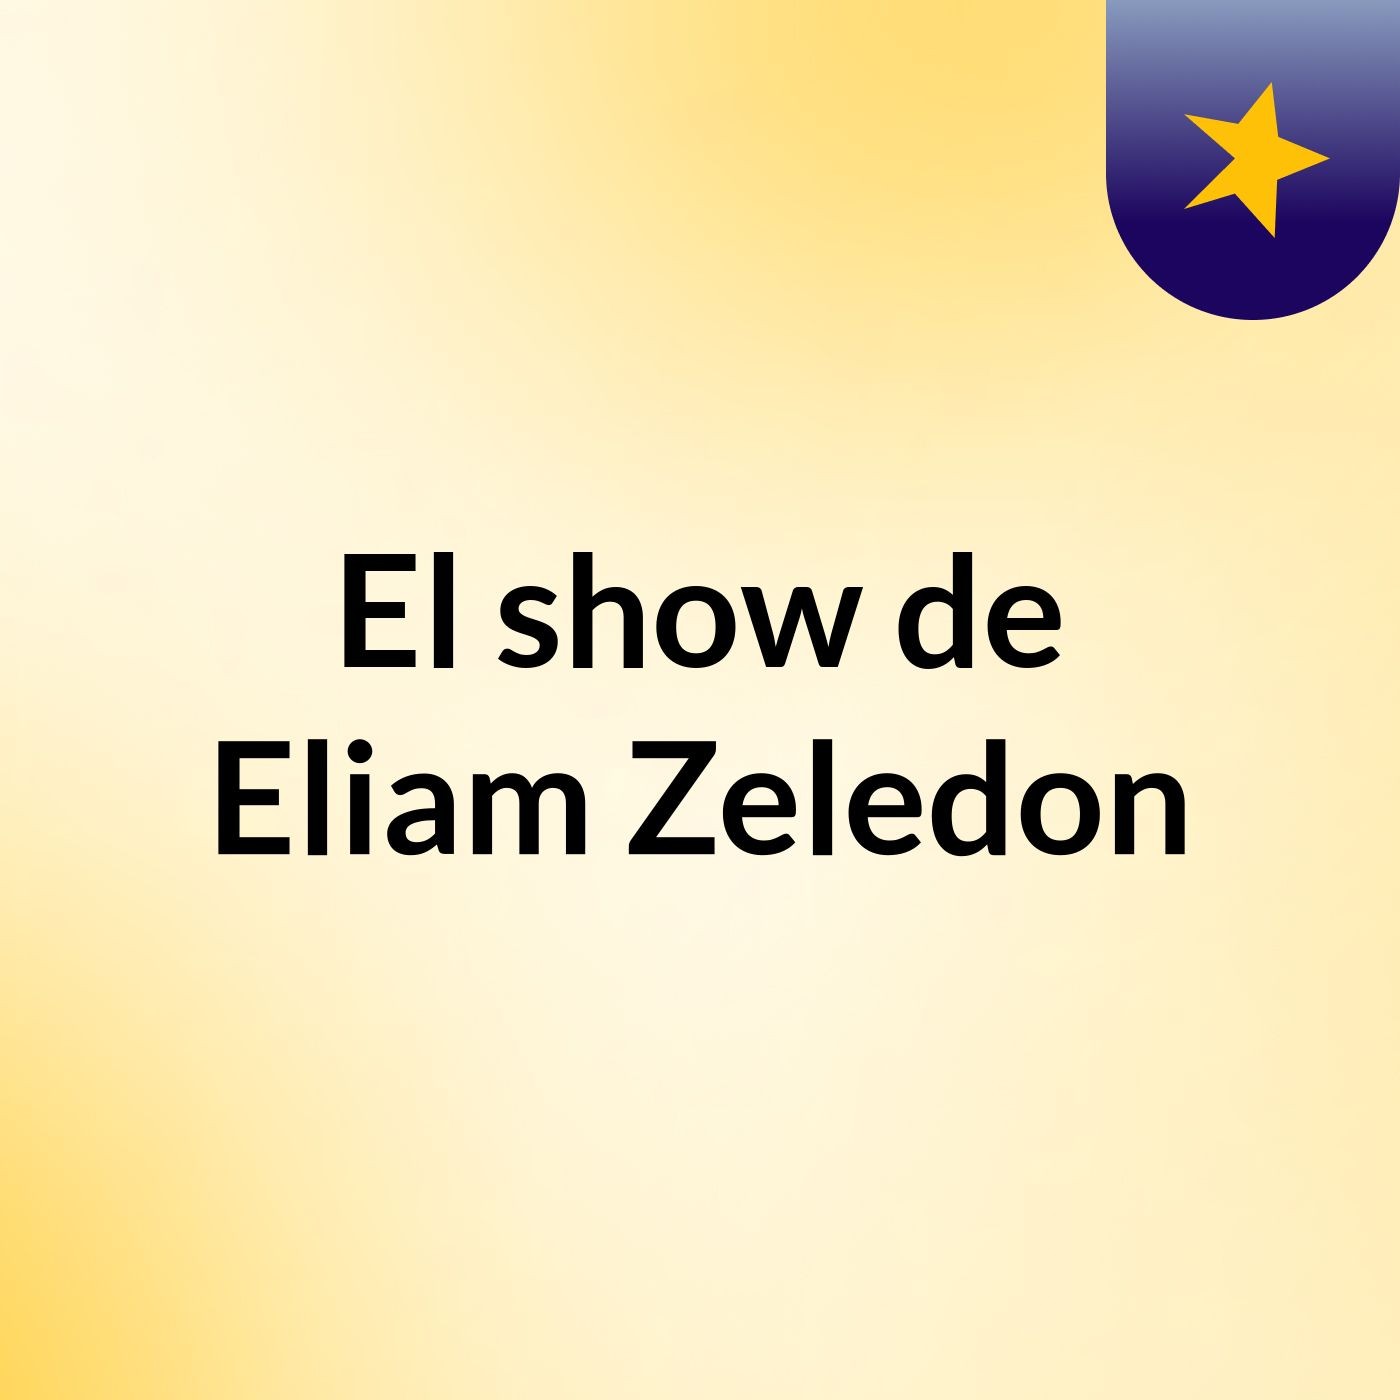 El show de Eliam Zeledon